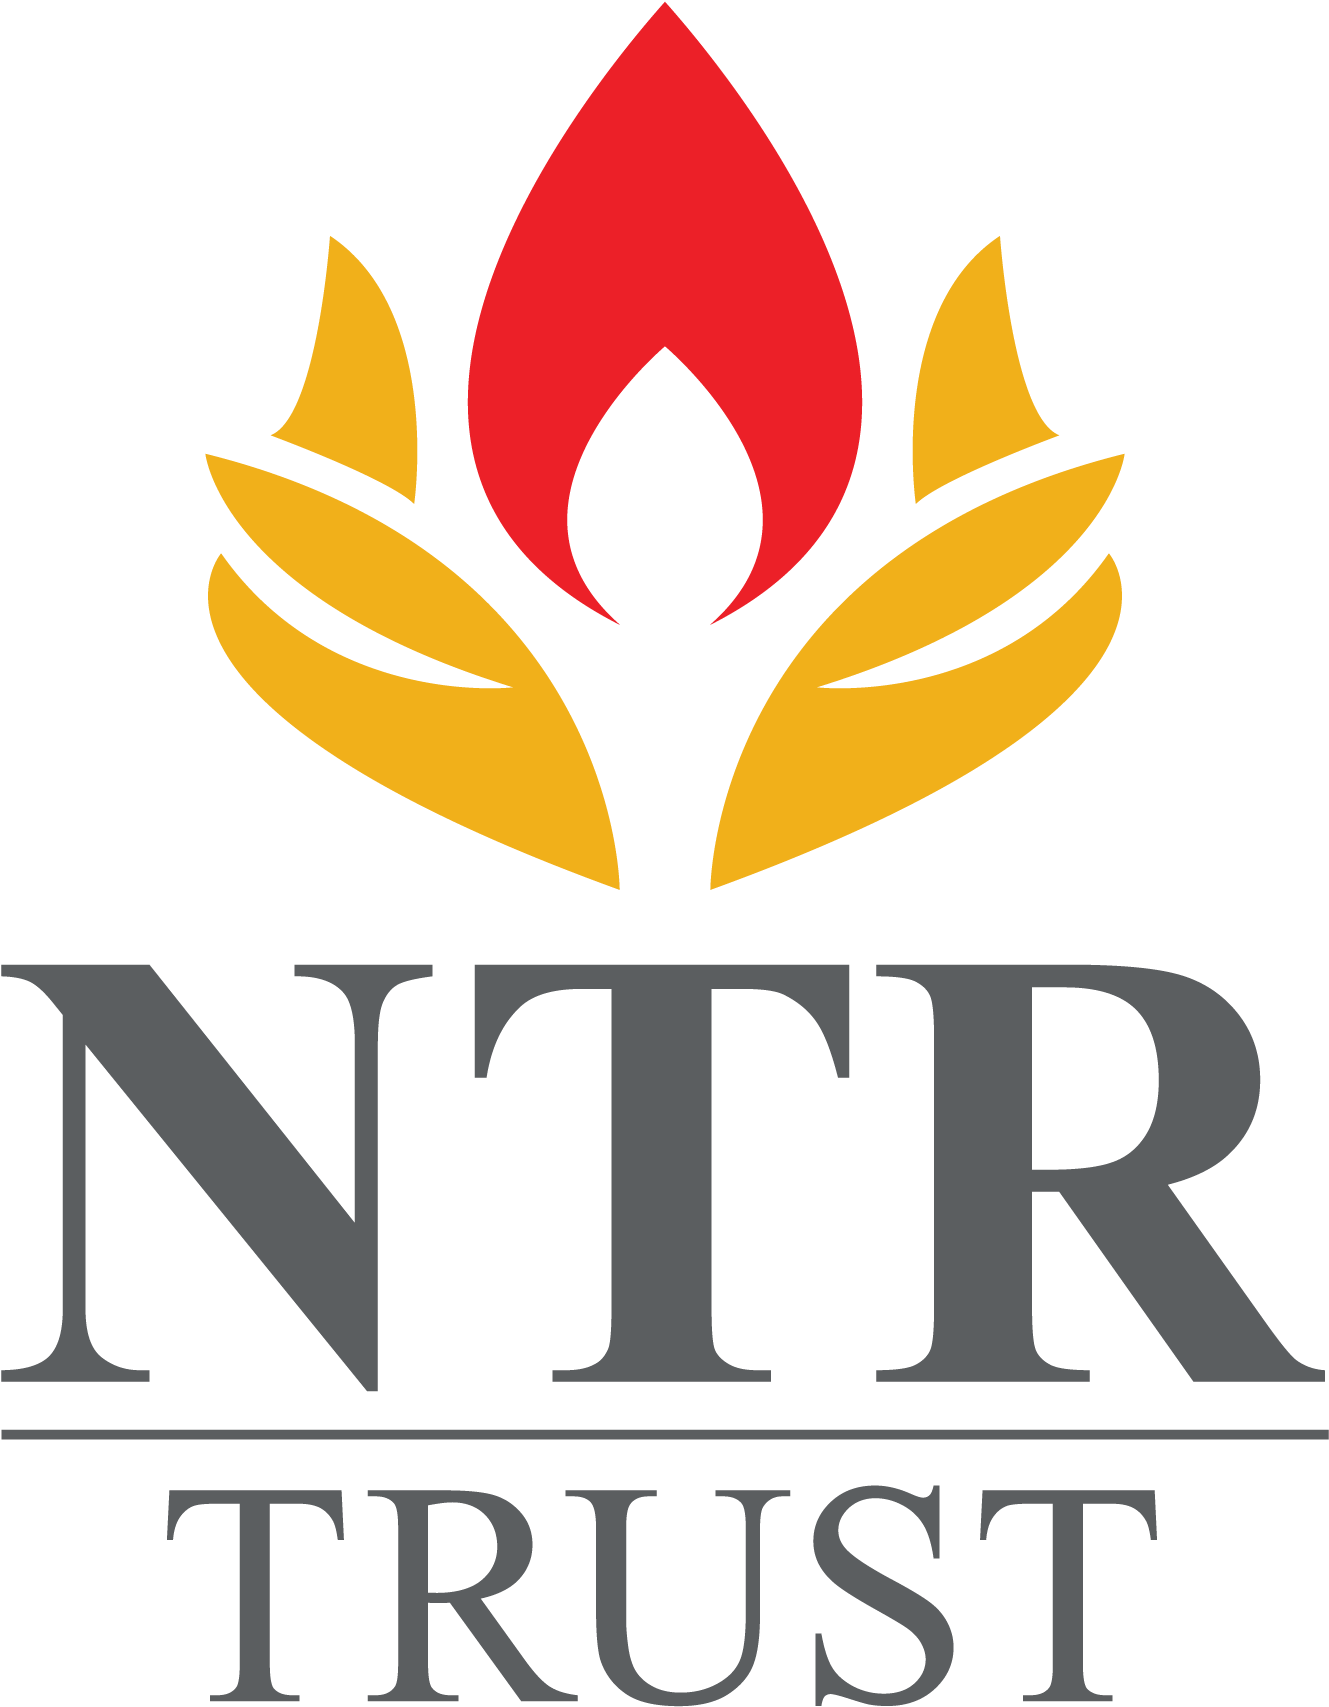 NTR Logo PNG Transparent & SVG Vector - Freebie Supply